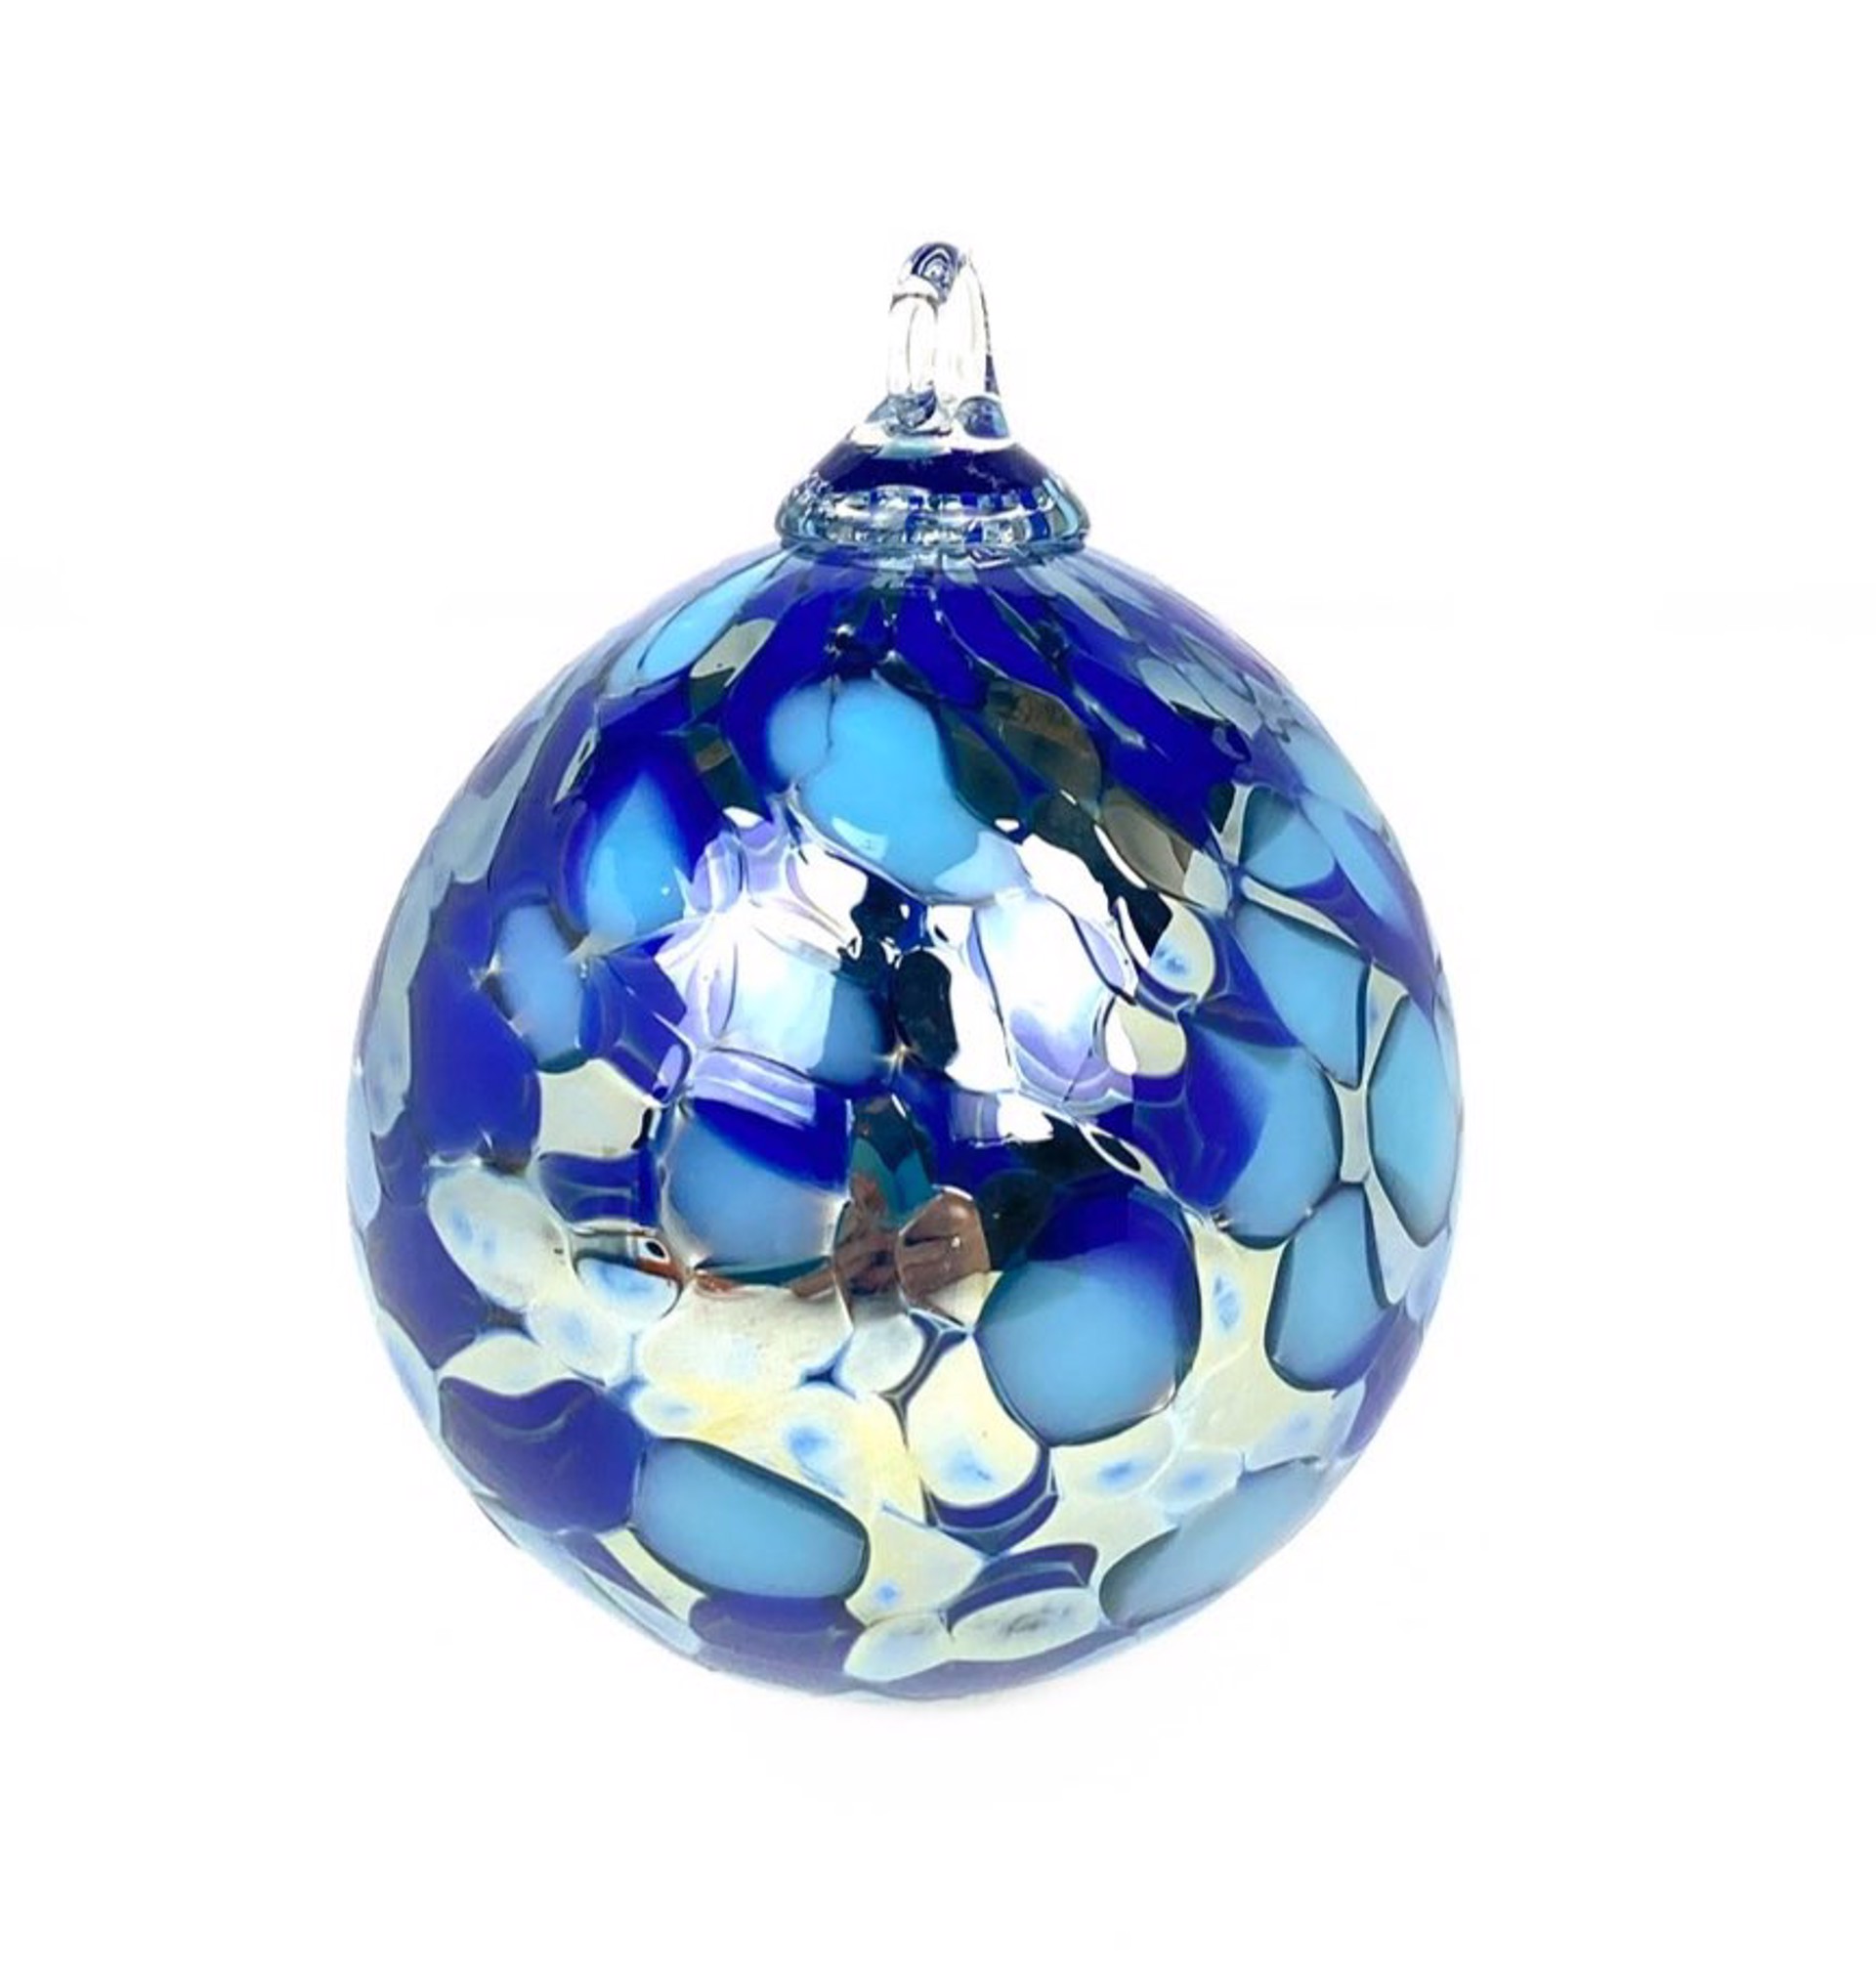 Dapple Lapis Ornament by Furnace Glass